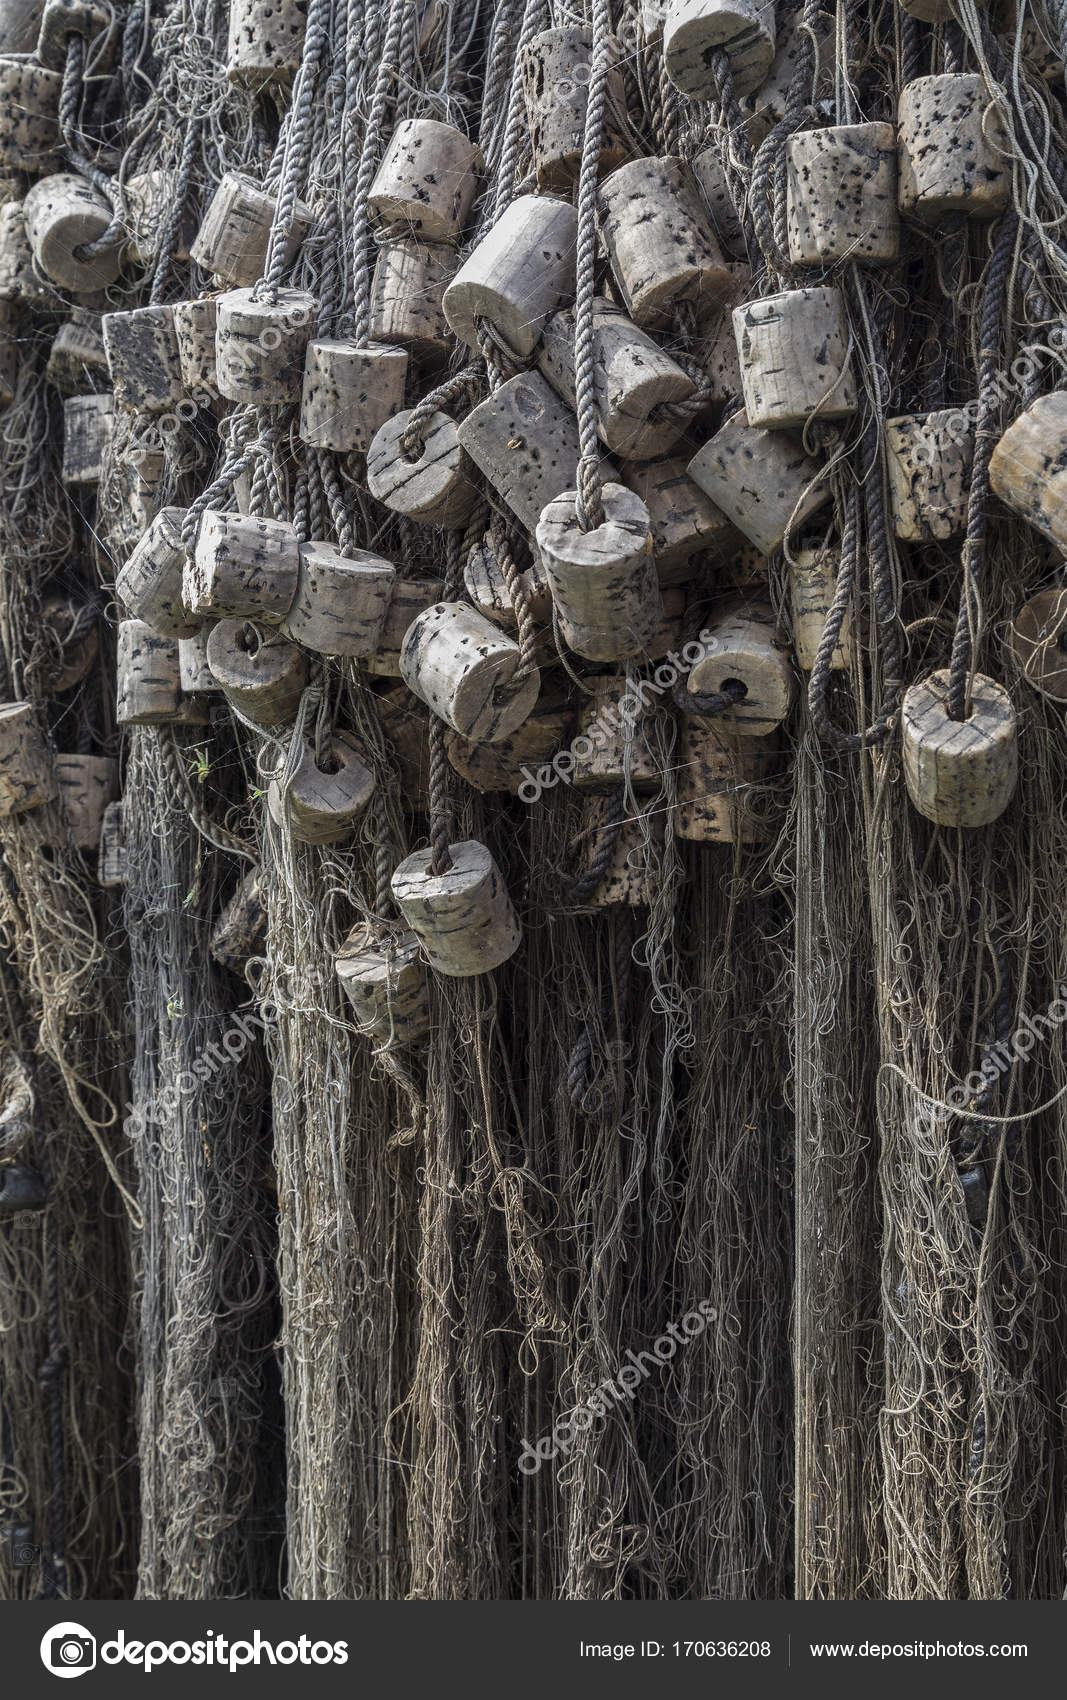 Fishing nets with cork floats — Stock Photo © Steve_Allen #170636208